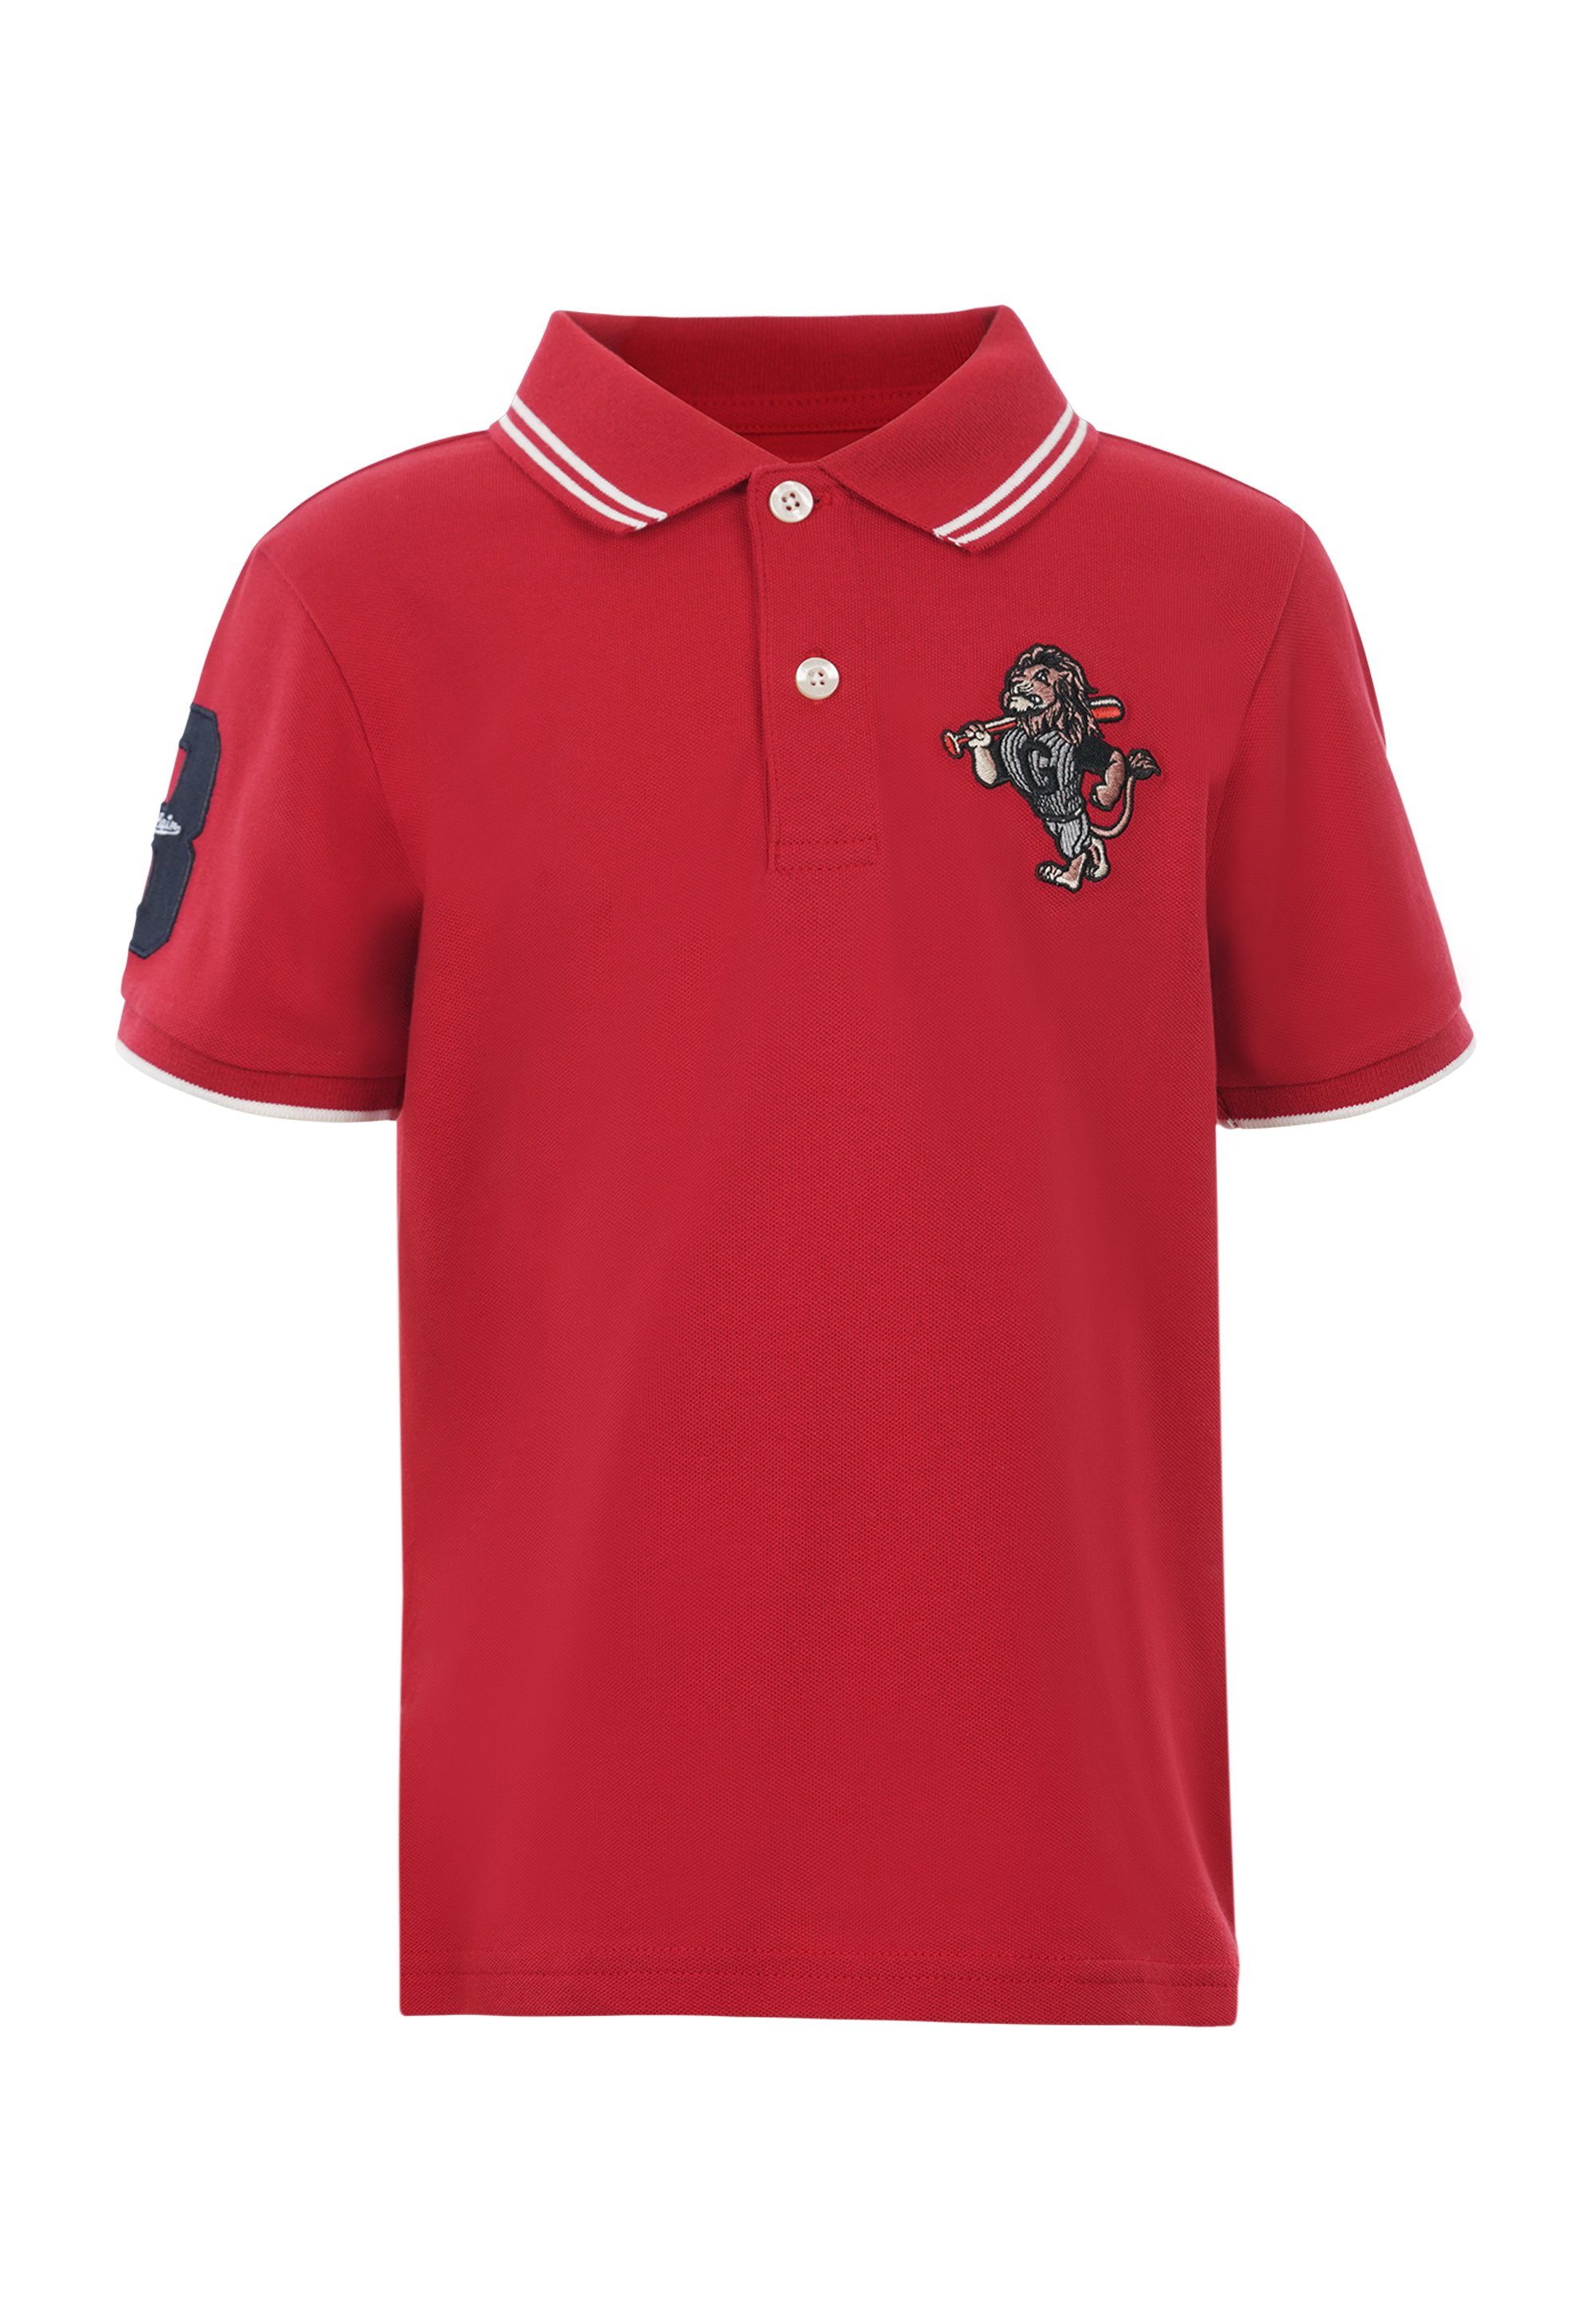 GIORDANO junior Poloshirt Retro Comic mit rot toller Löwen-Stickerei Style